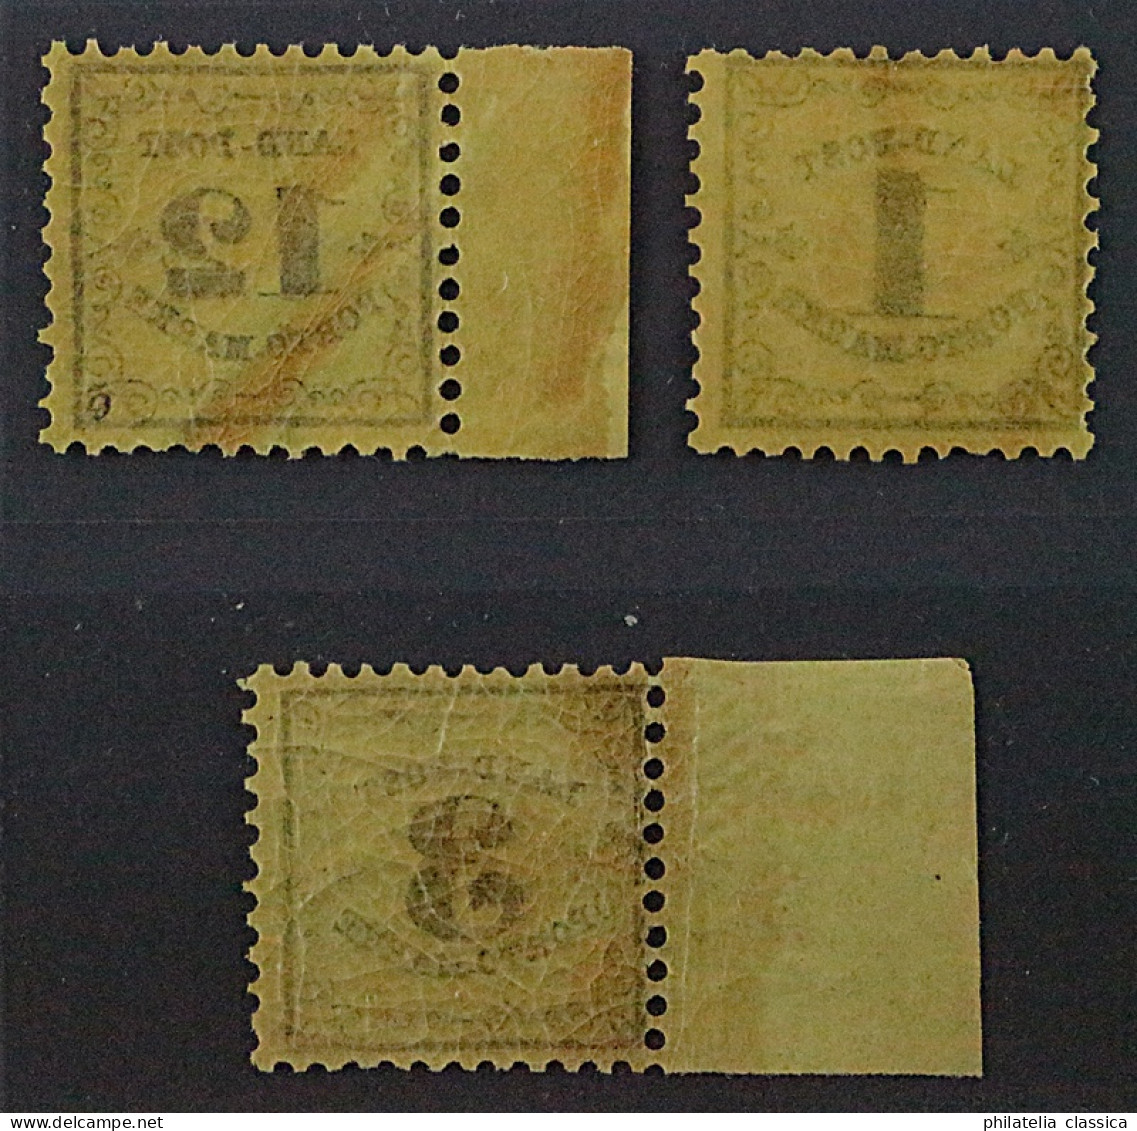 1862, BADEN Landpost 1-3 X ** 1-12 Kr. Komplett Postfrisch, TOP-Qualität, 118,-€ - Postfris